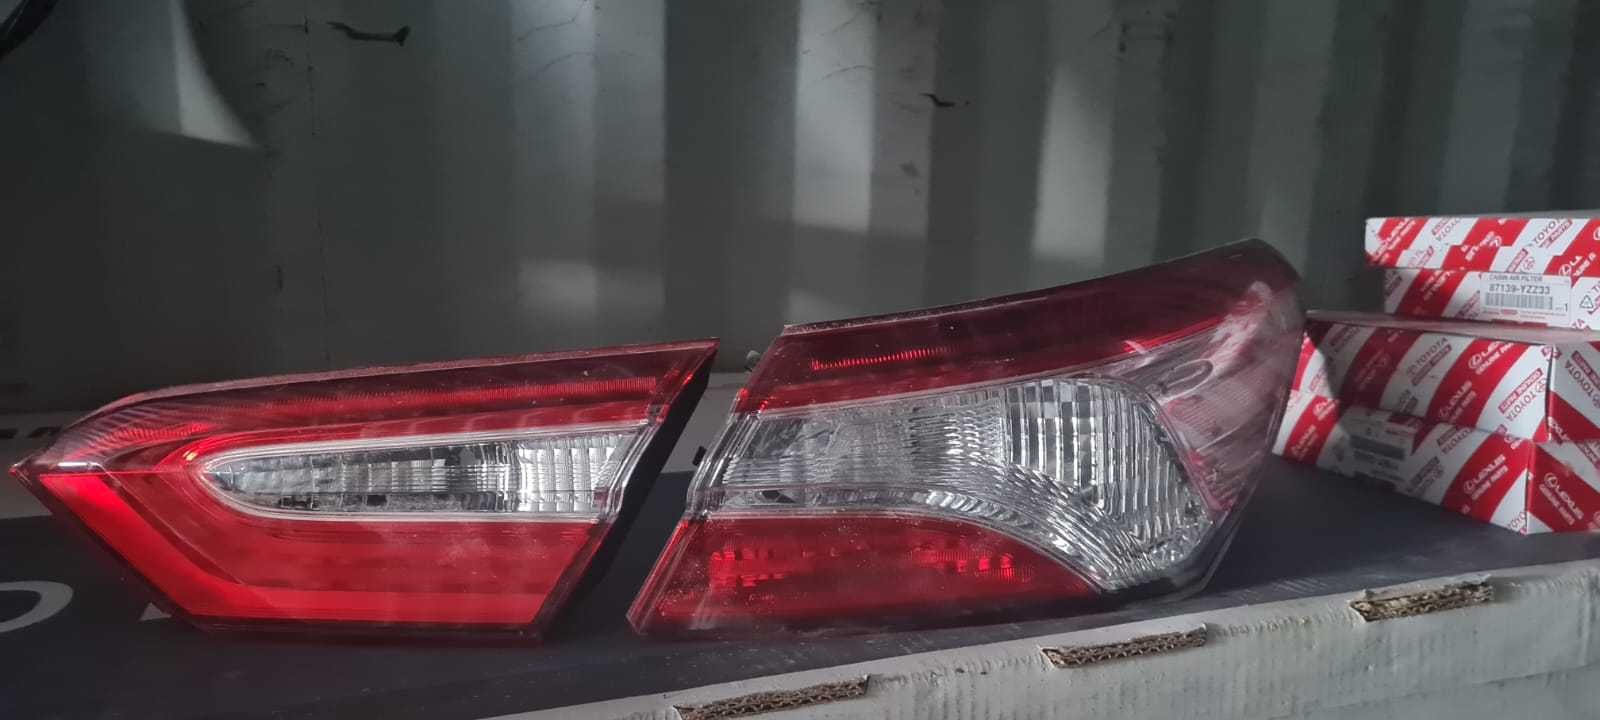 Задний бампер в комплекте на Toyota Camry 75 (Камри 75)